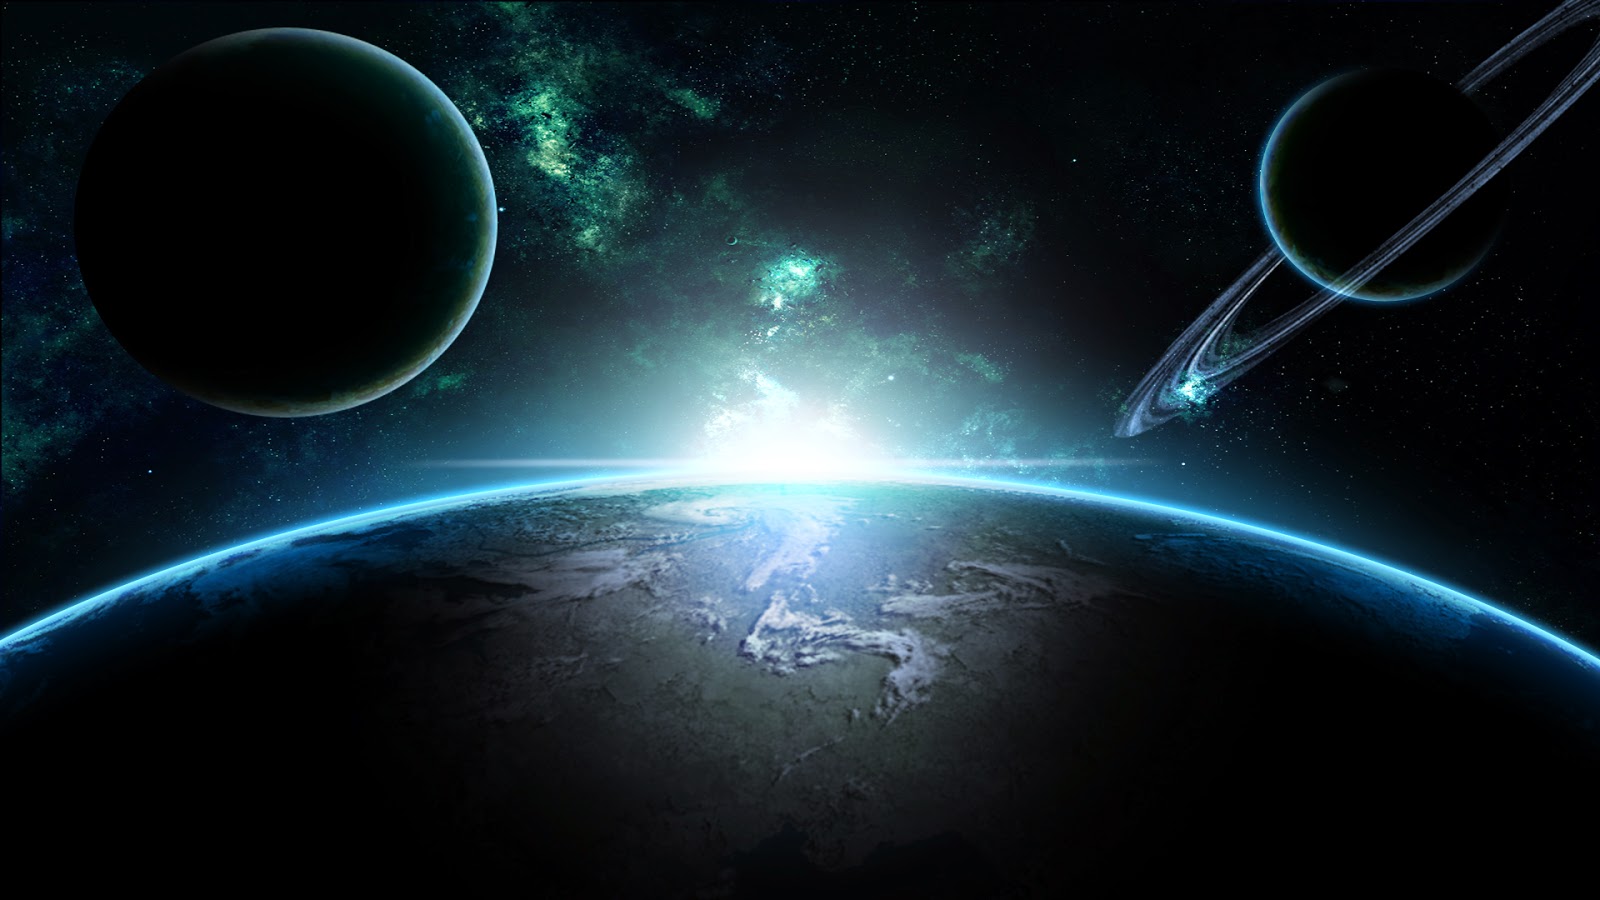 d nya fondo de pantalla,espacio exterior,atmósfera,planeta,objeto astronómico,universo